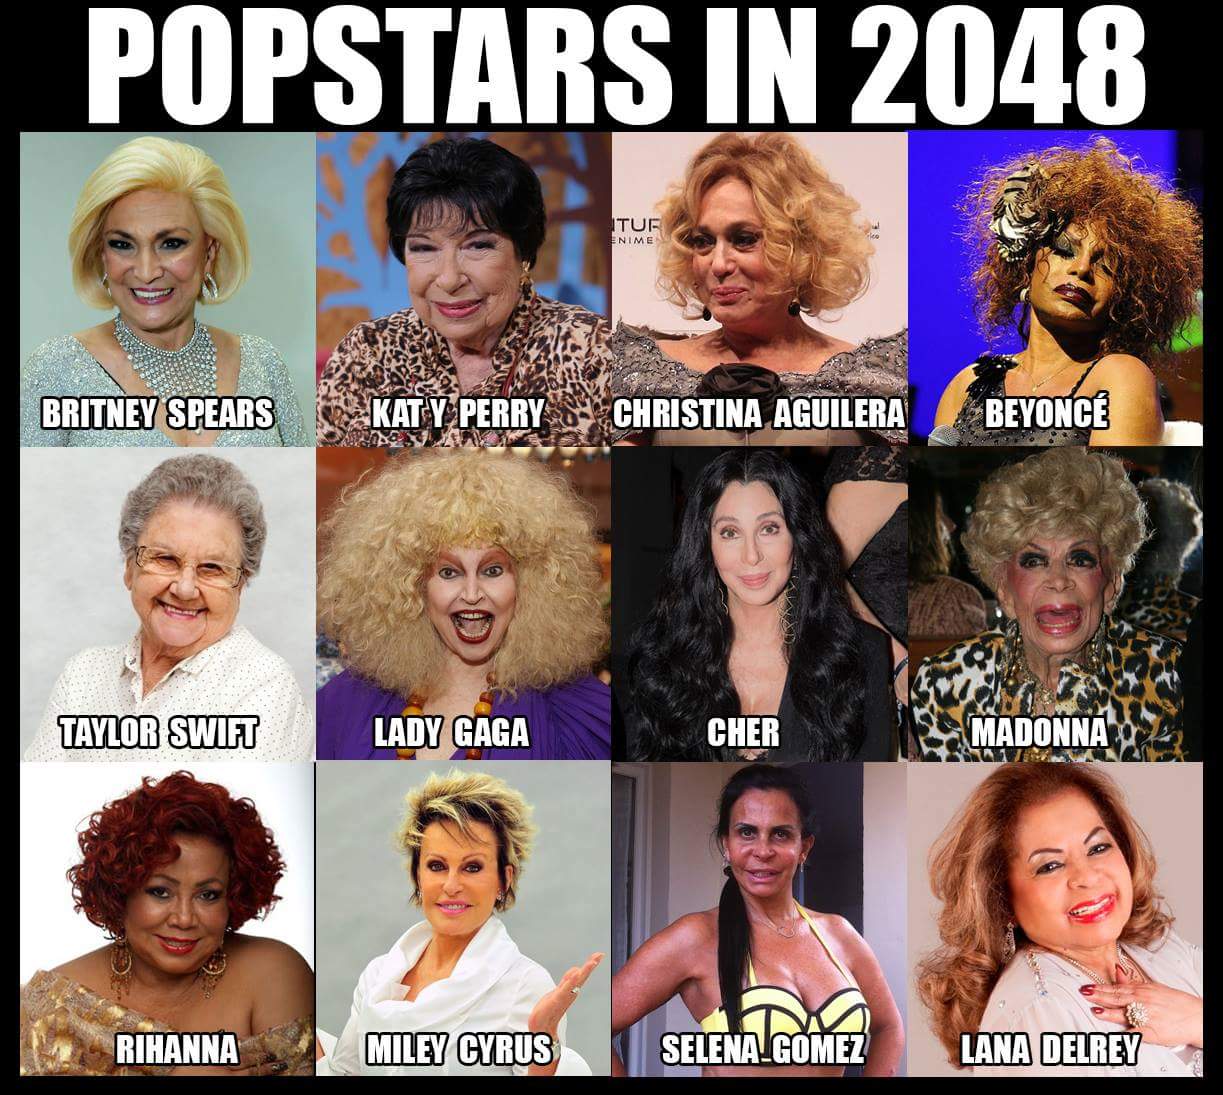 Pop stars